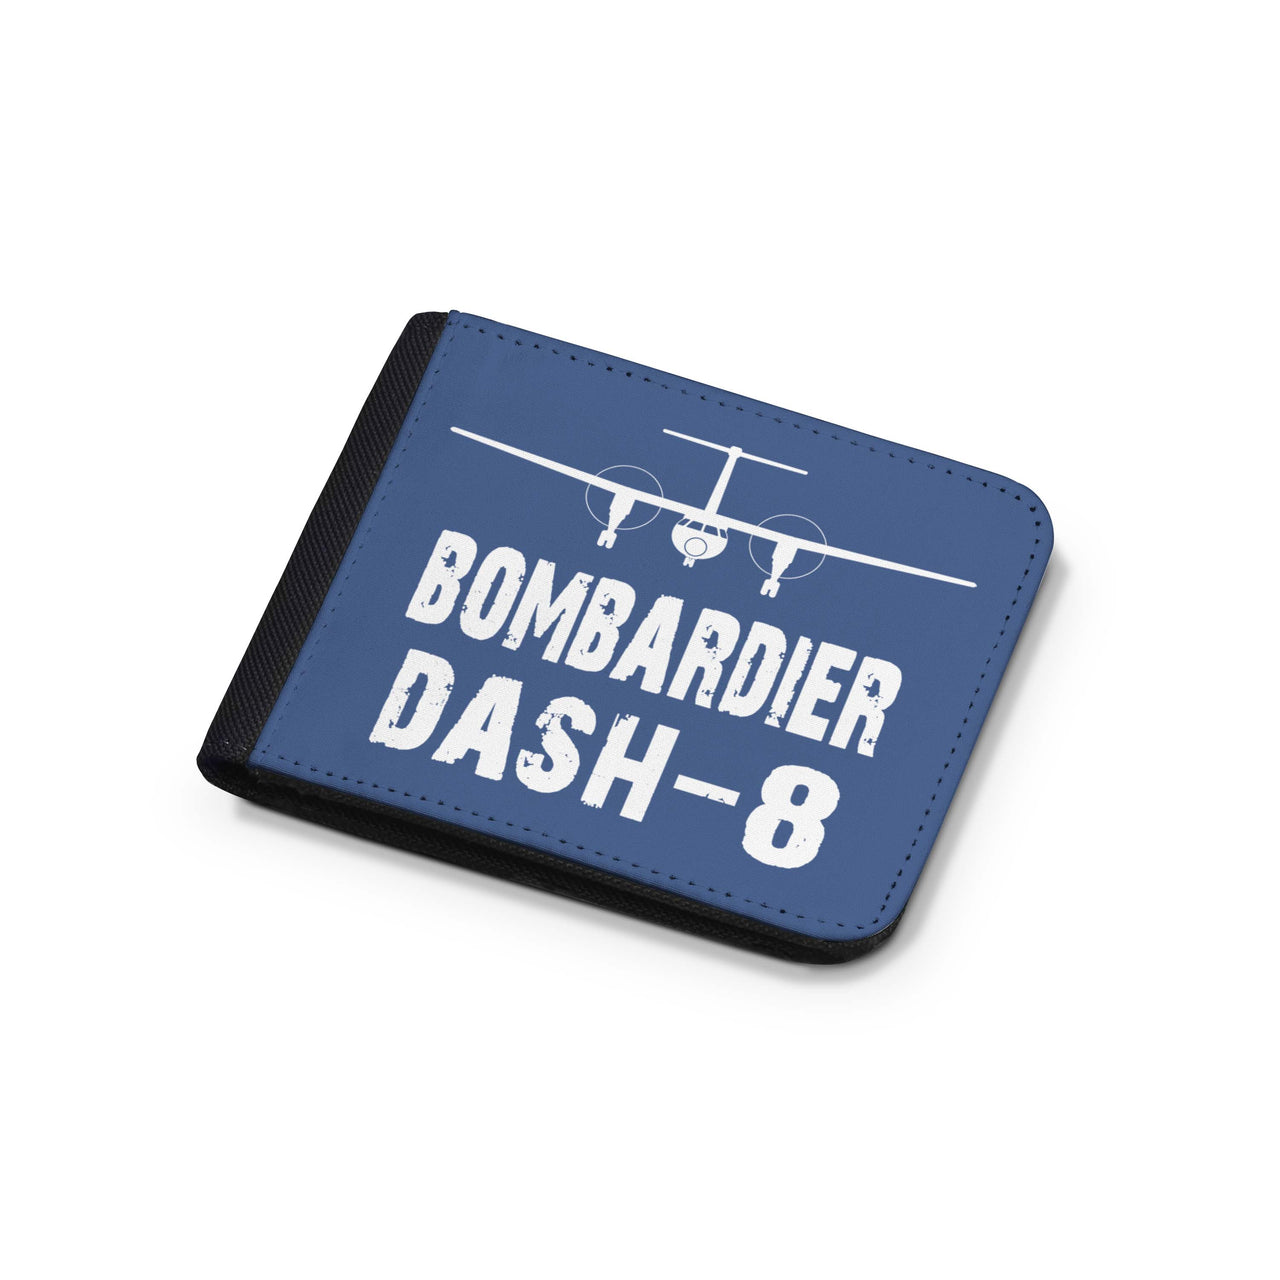 Bombardier Dash-8 & Plane Designed Wallets